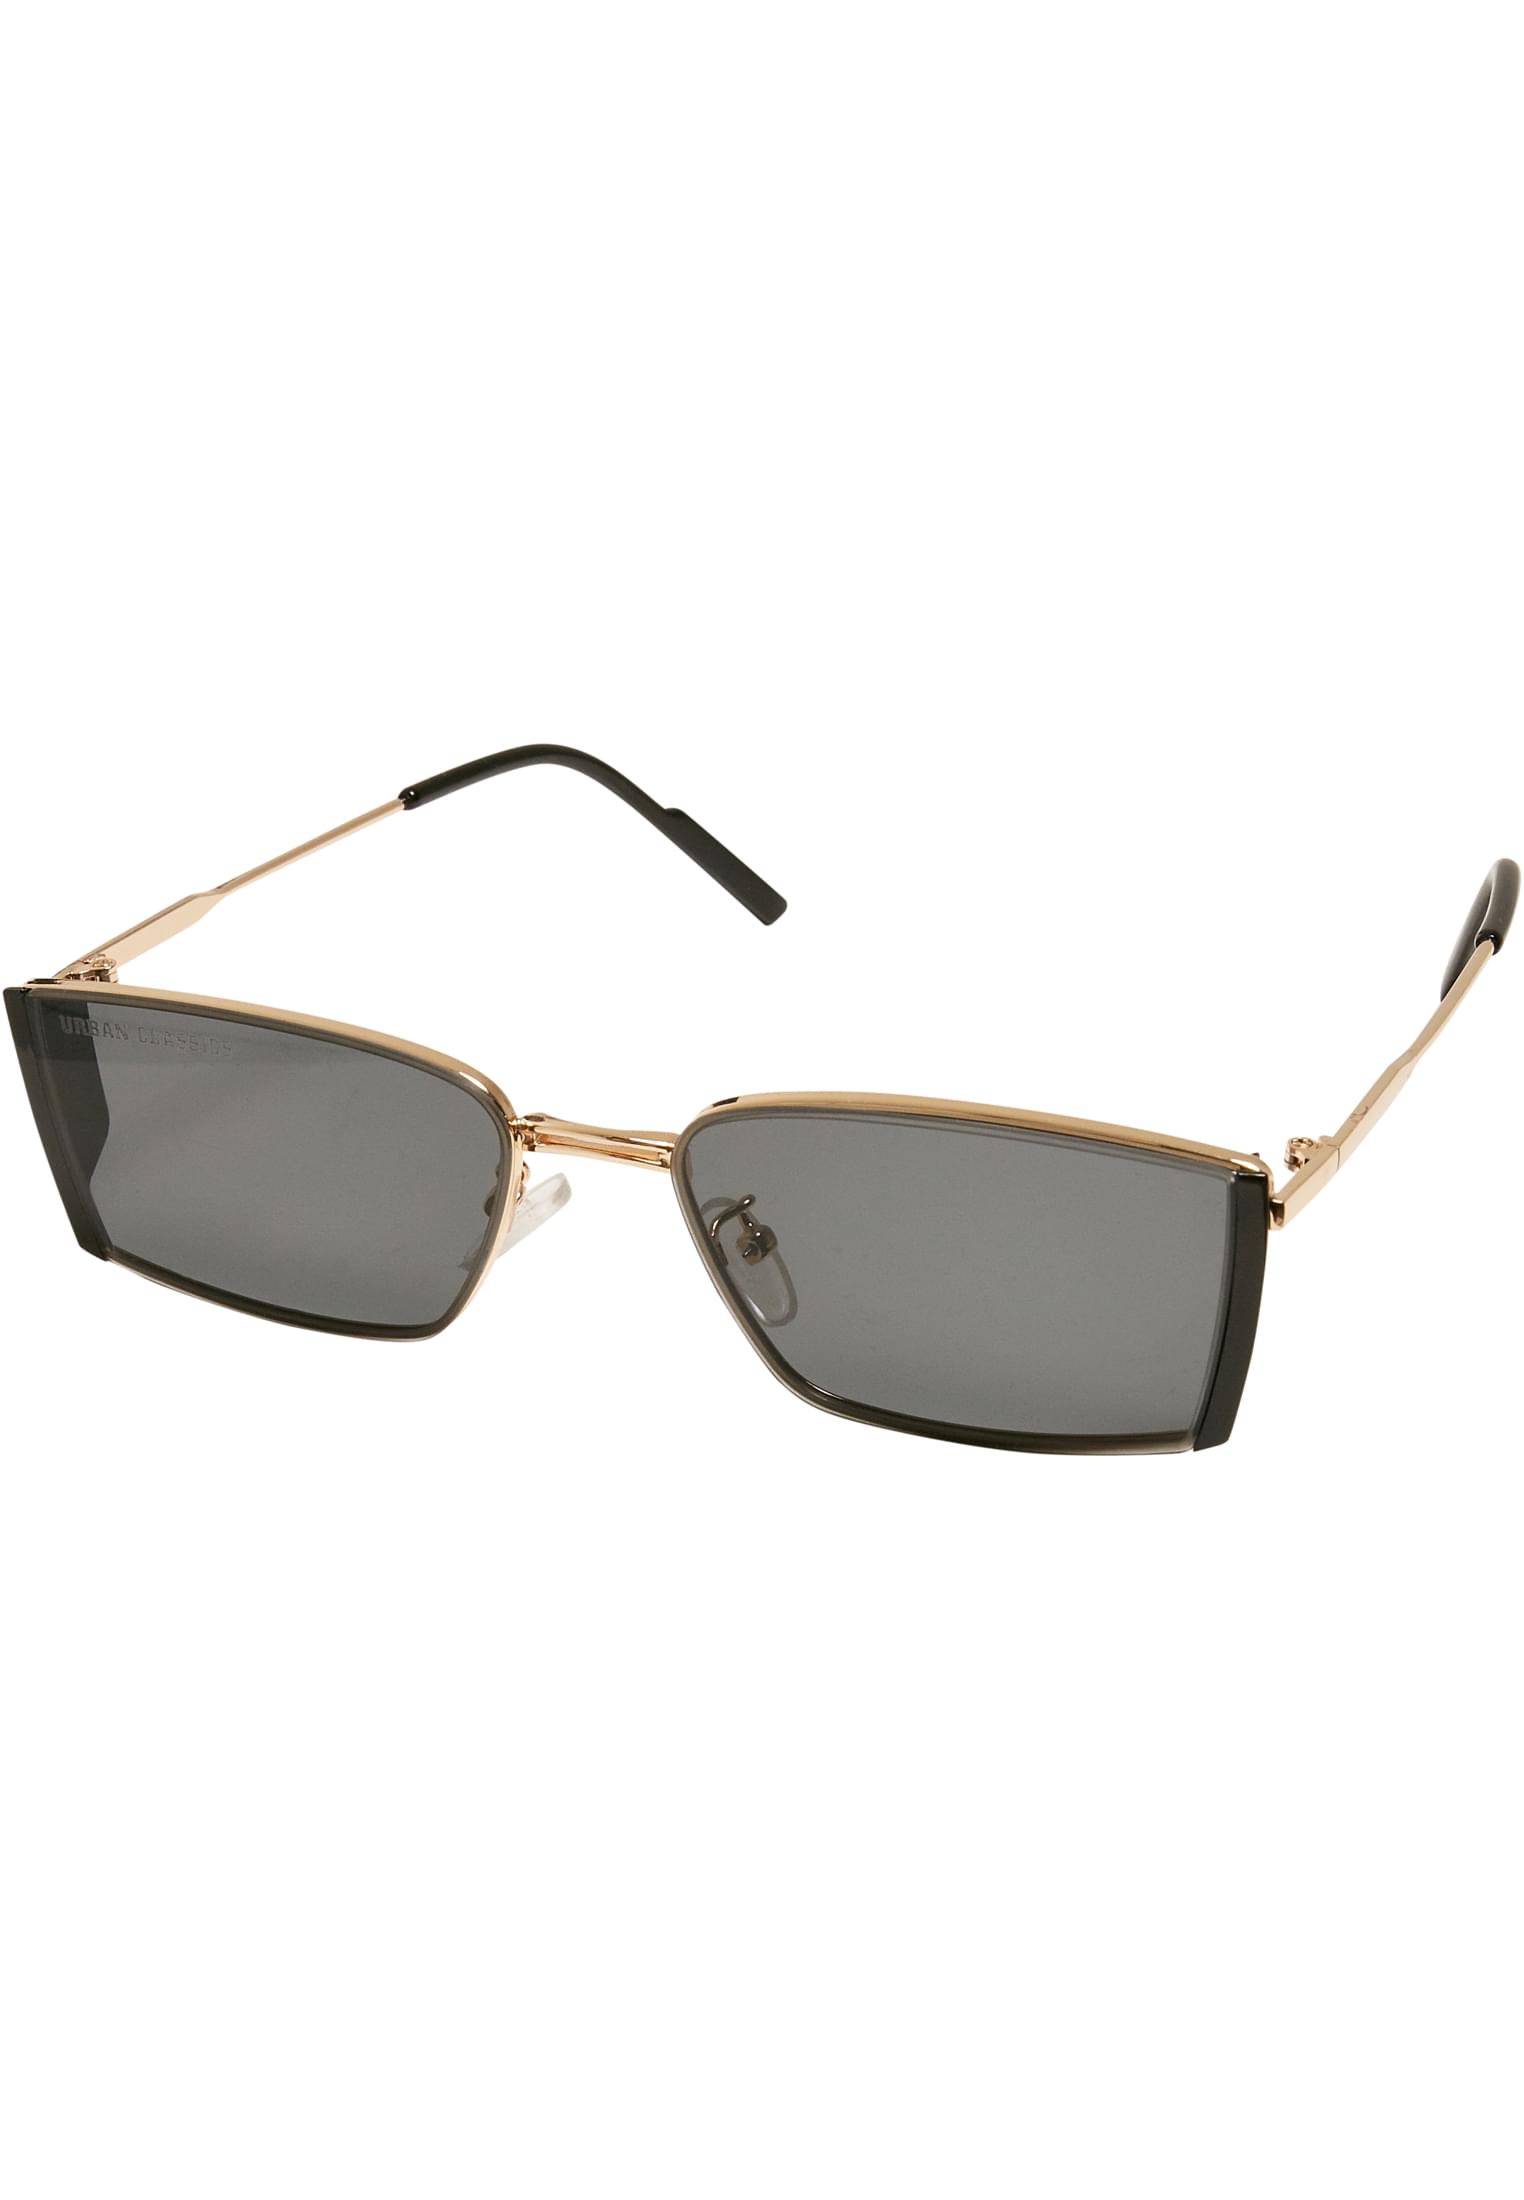 Sunglasses Ohio Black/Gold